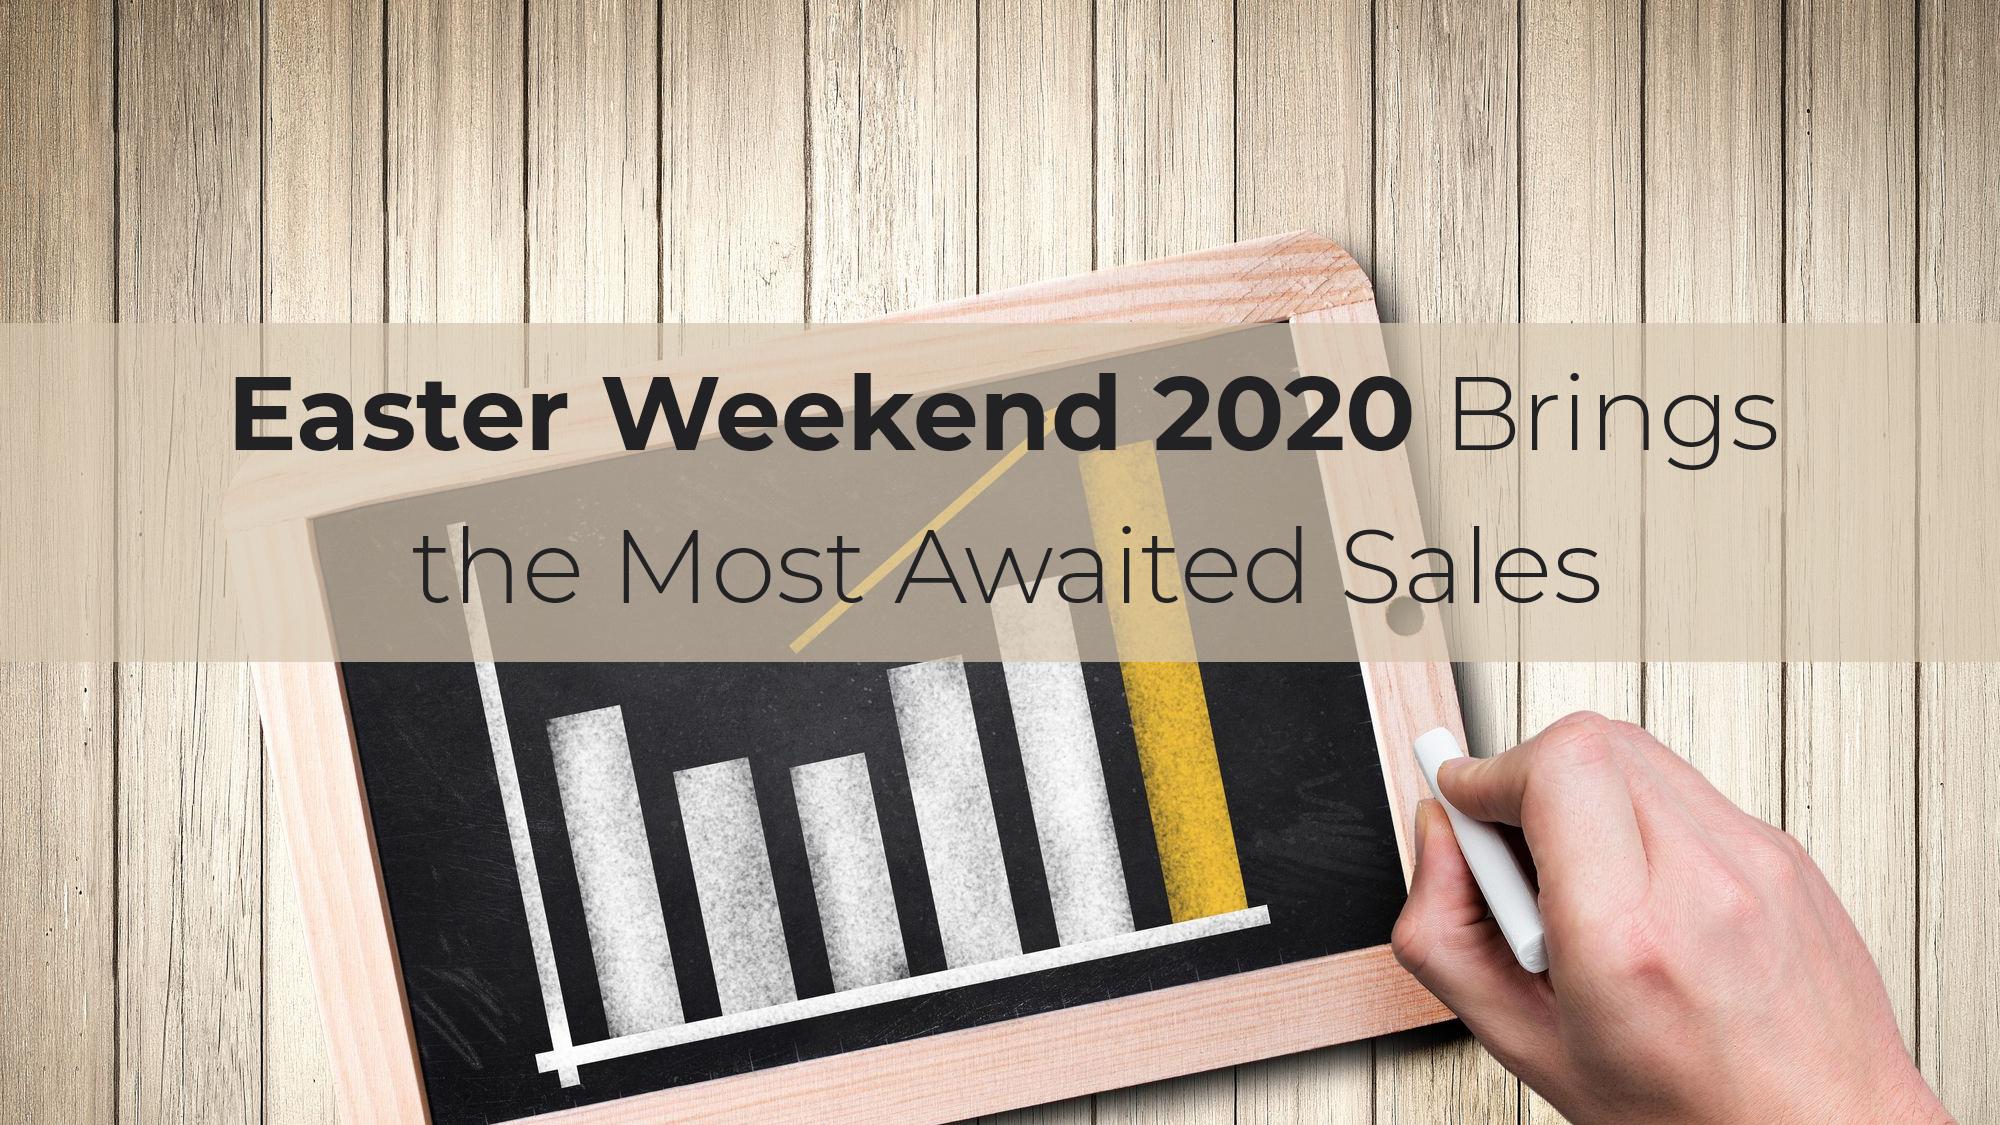 Easter Weekend 2020 Brings the Most Awaited Sales